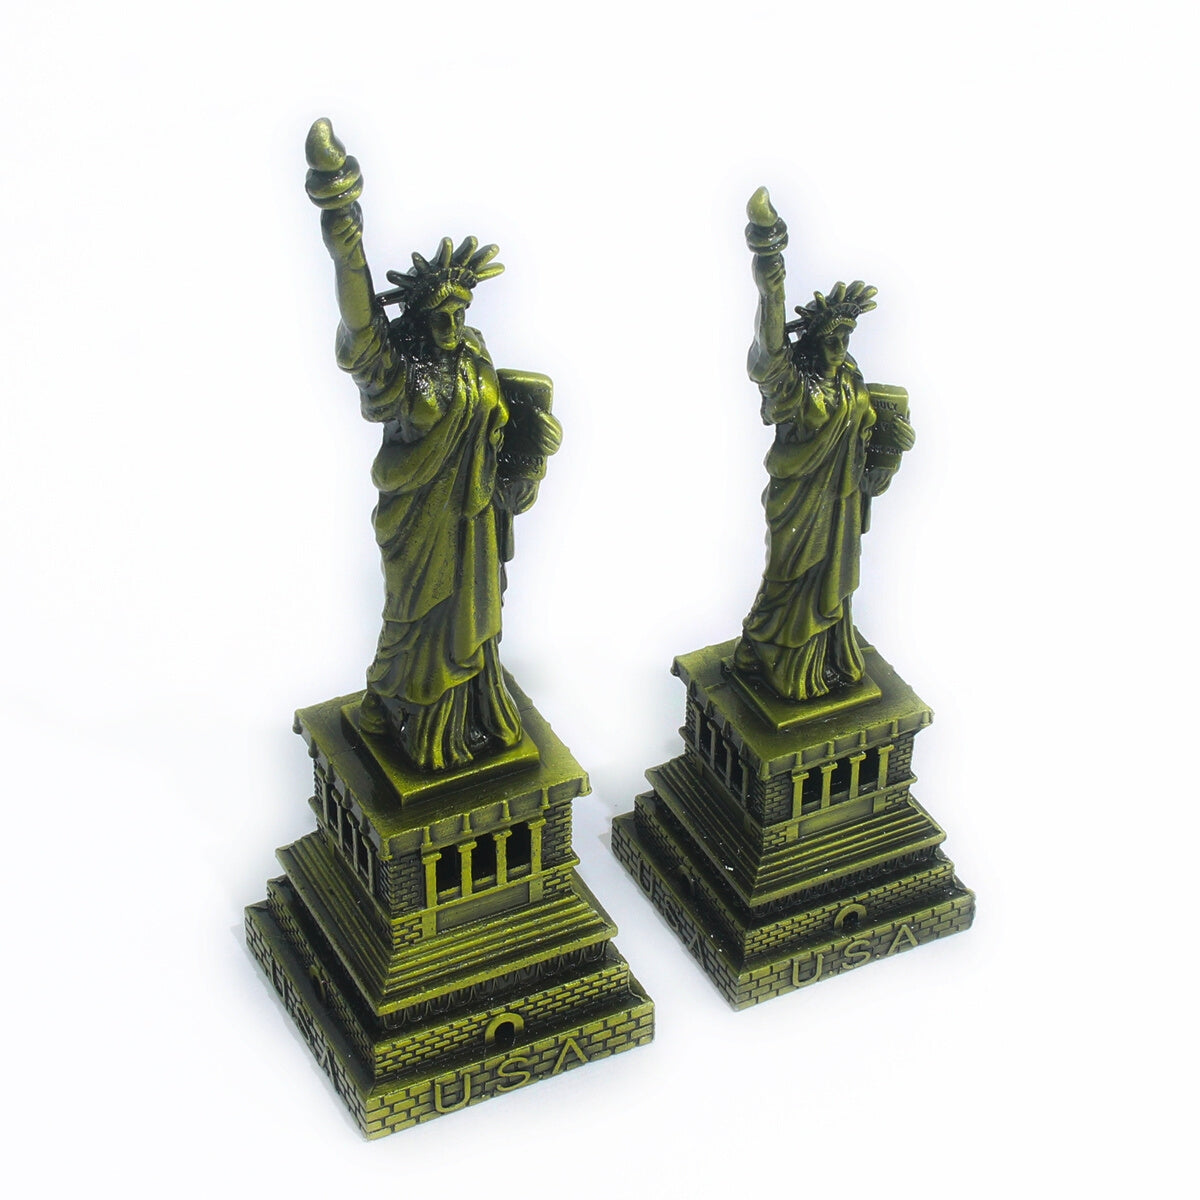 Statue of Liberty Metal Model for Home Decor Gift | USA|-Maya Bazaar